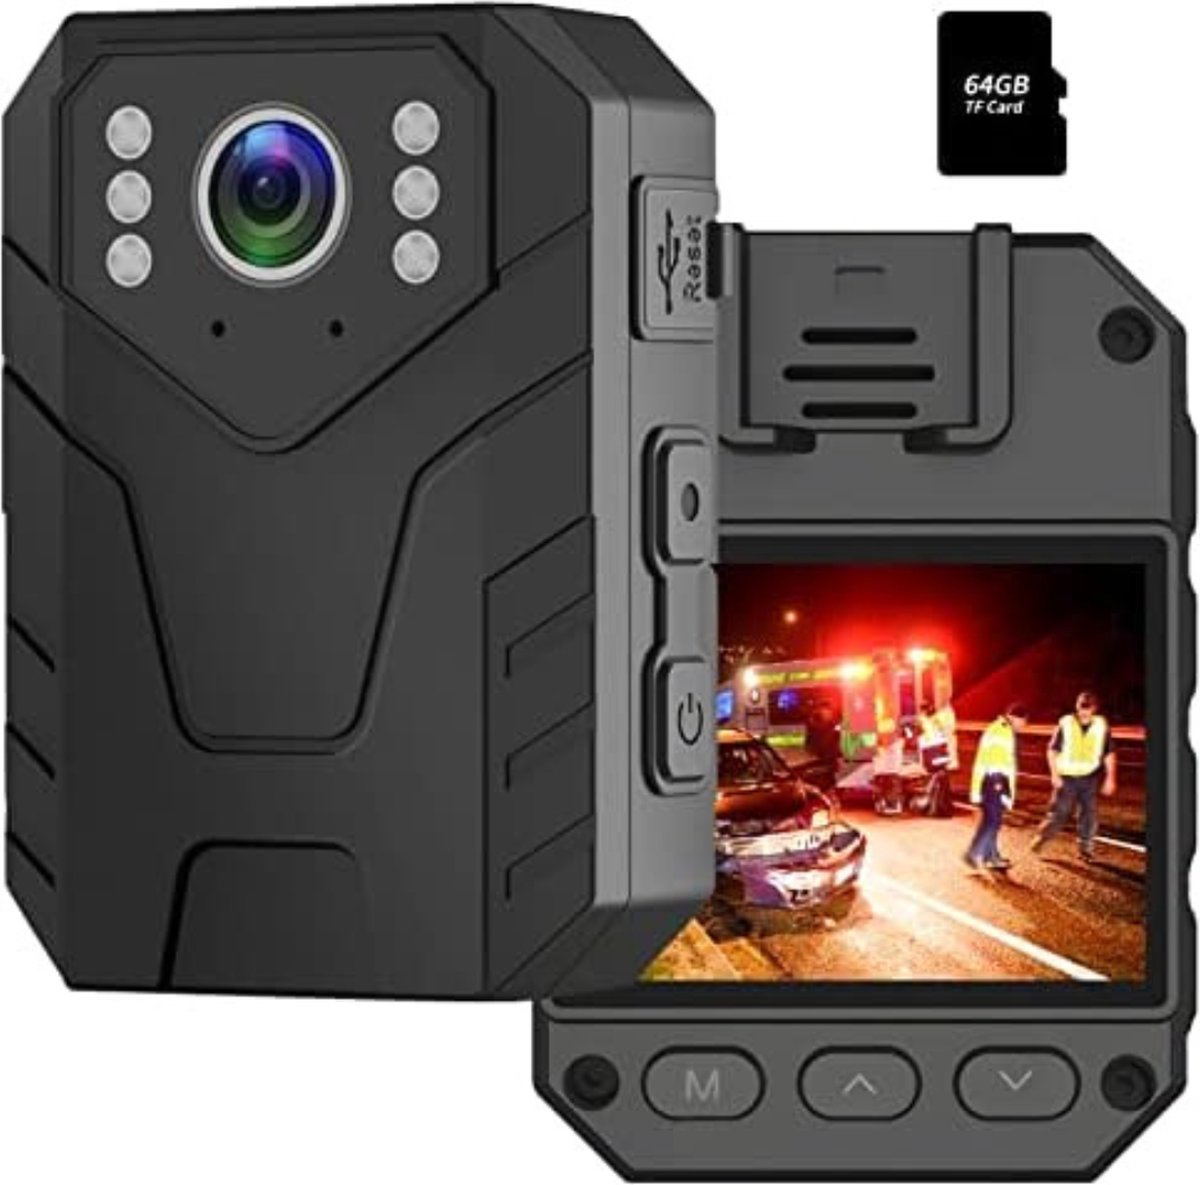 Bodycam - Bodycam Politie - Body Cam - Body Camera